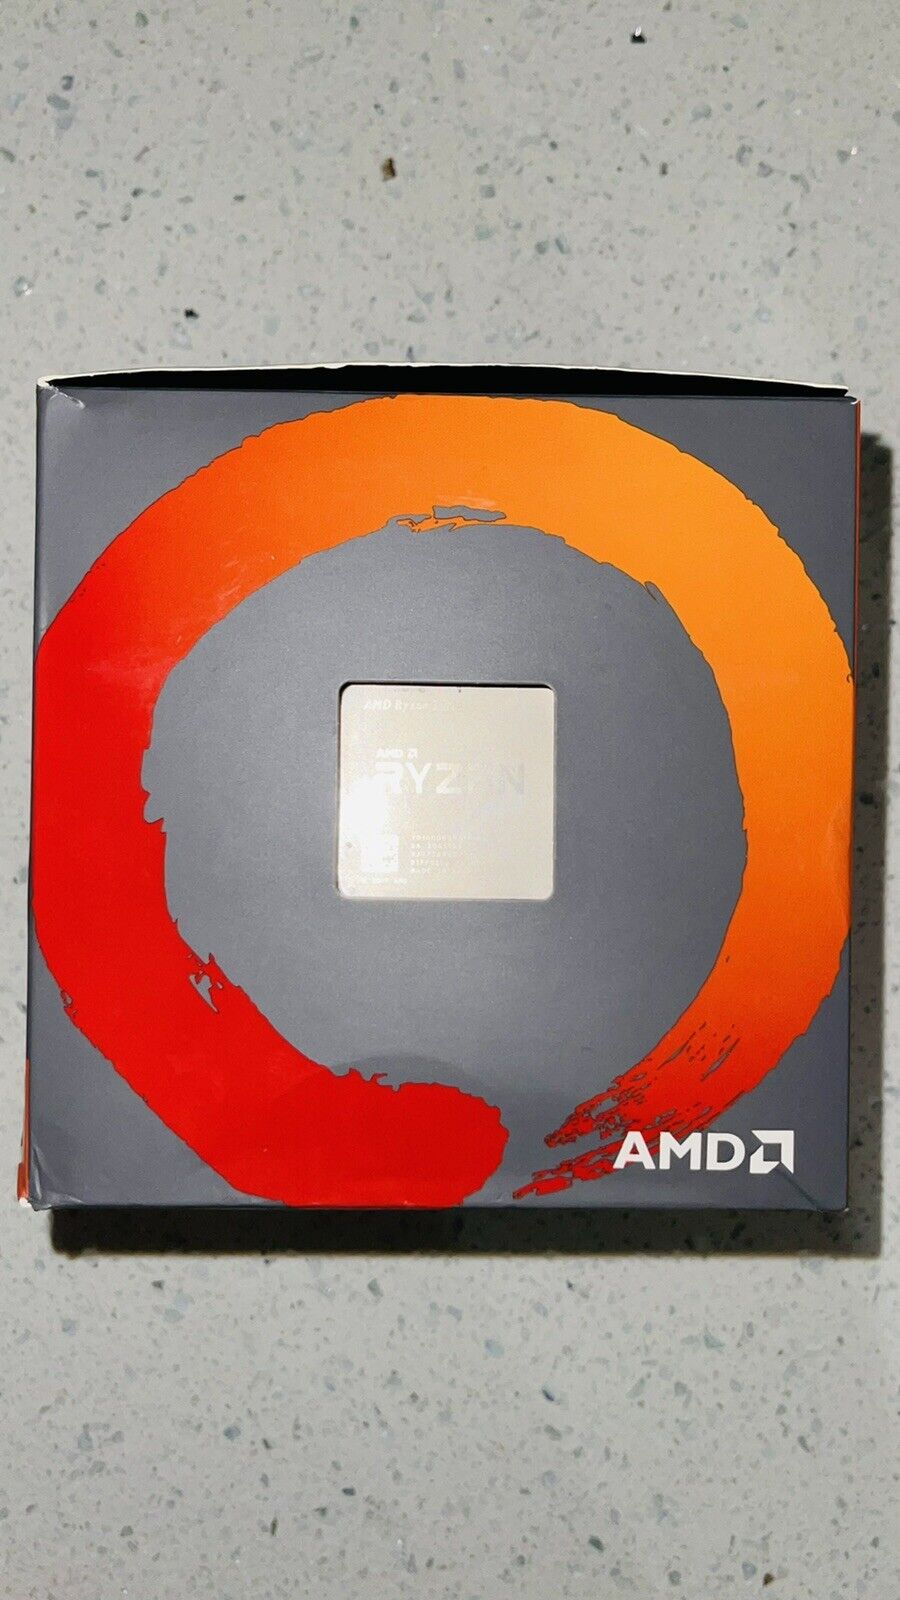 AMD Ryzen 5 1600 | Heatsink Included With Pre installed Corsair Thermal Paste